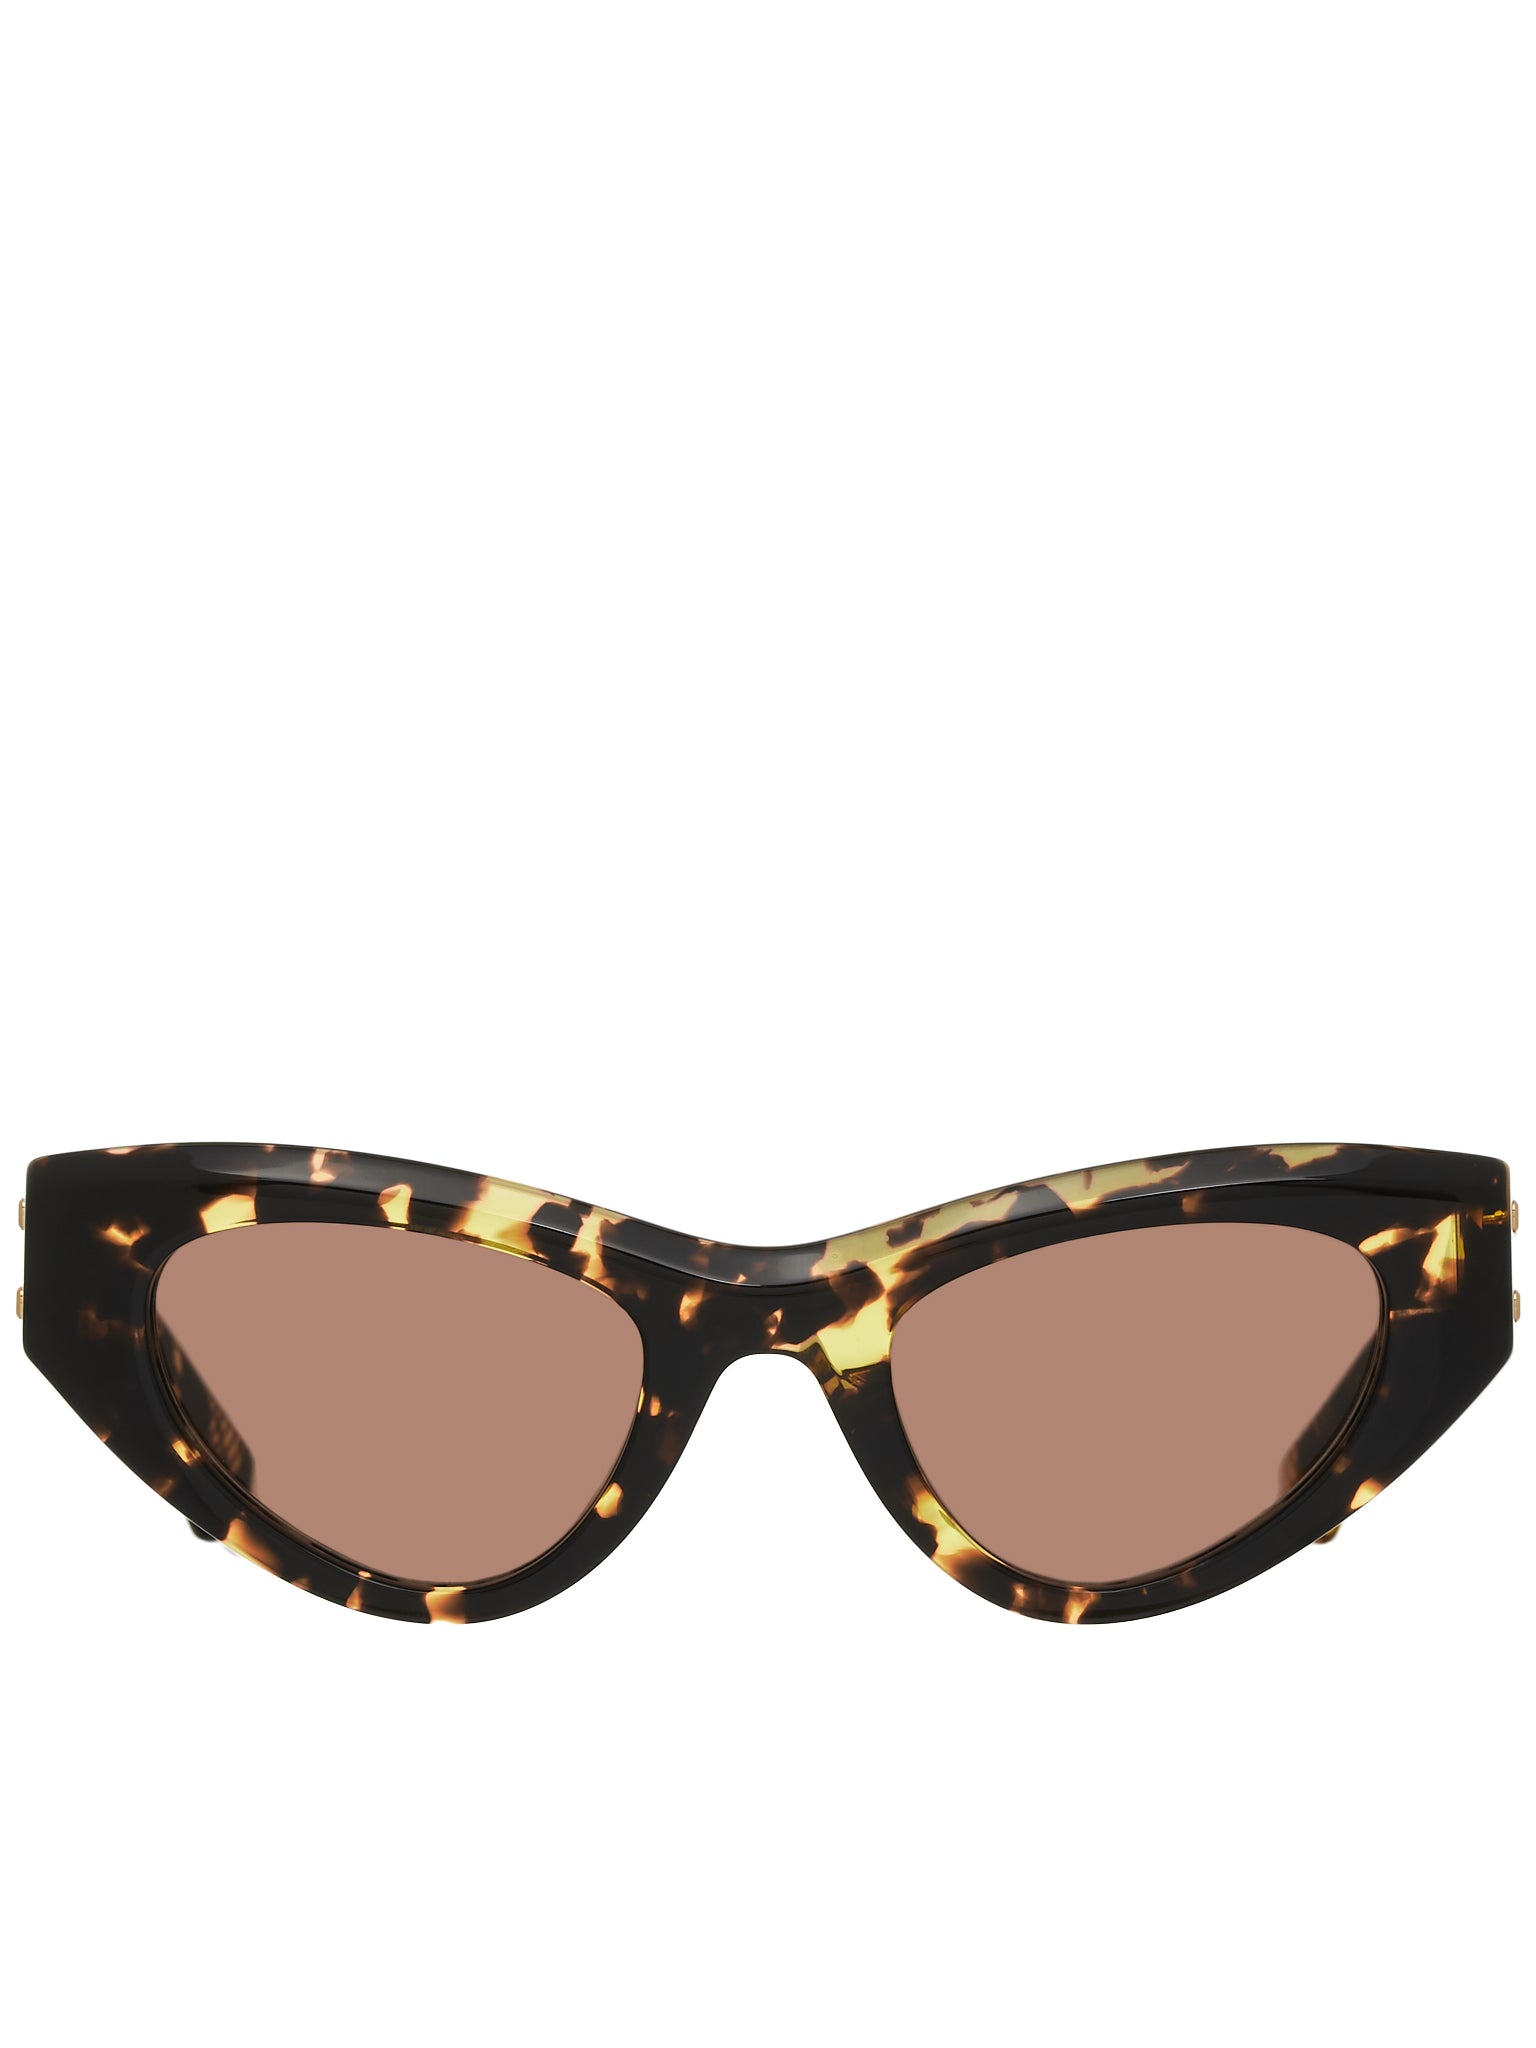 Bottega Veneta Cat Eye Sunglasses | H.Lorenzo - front